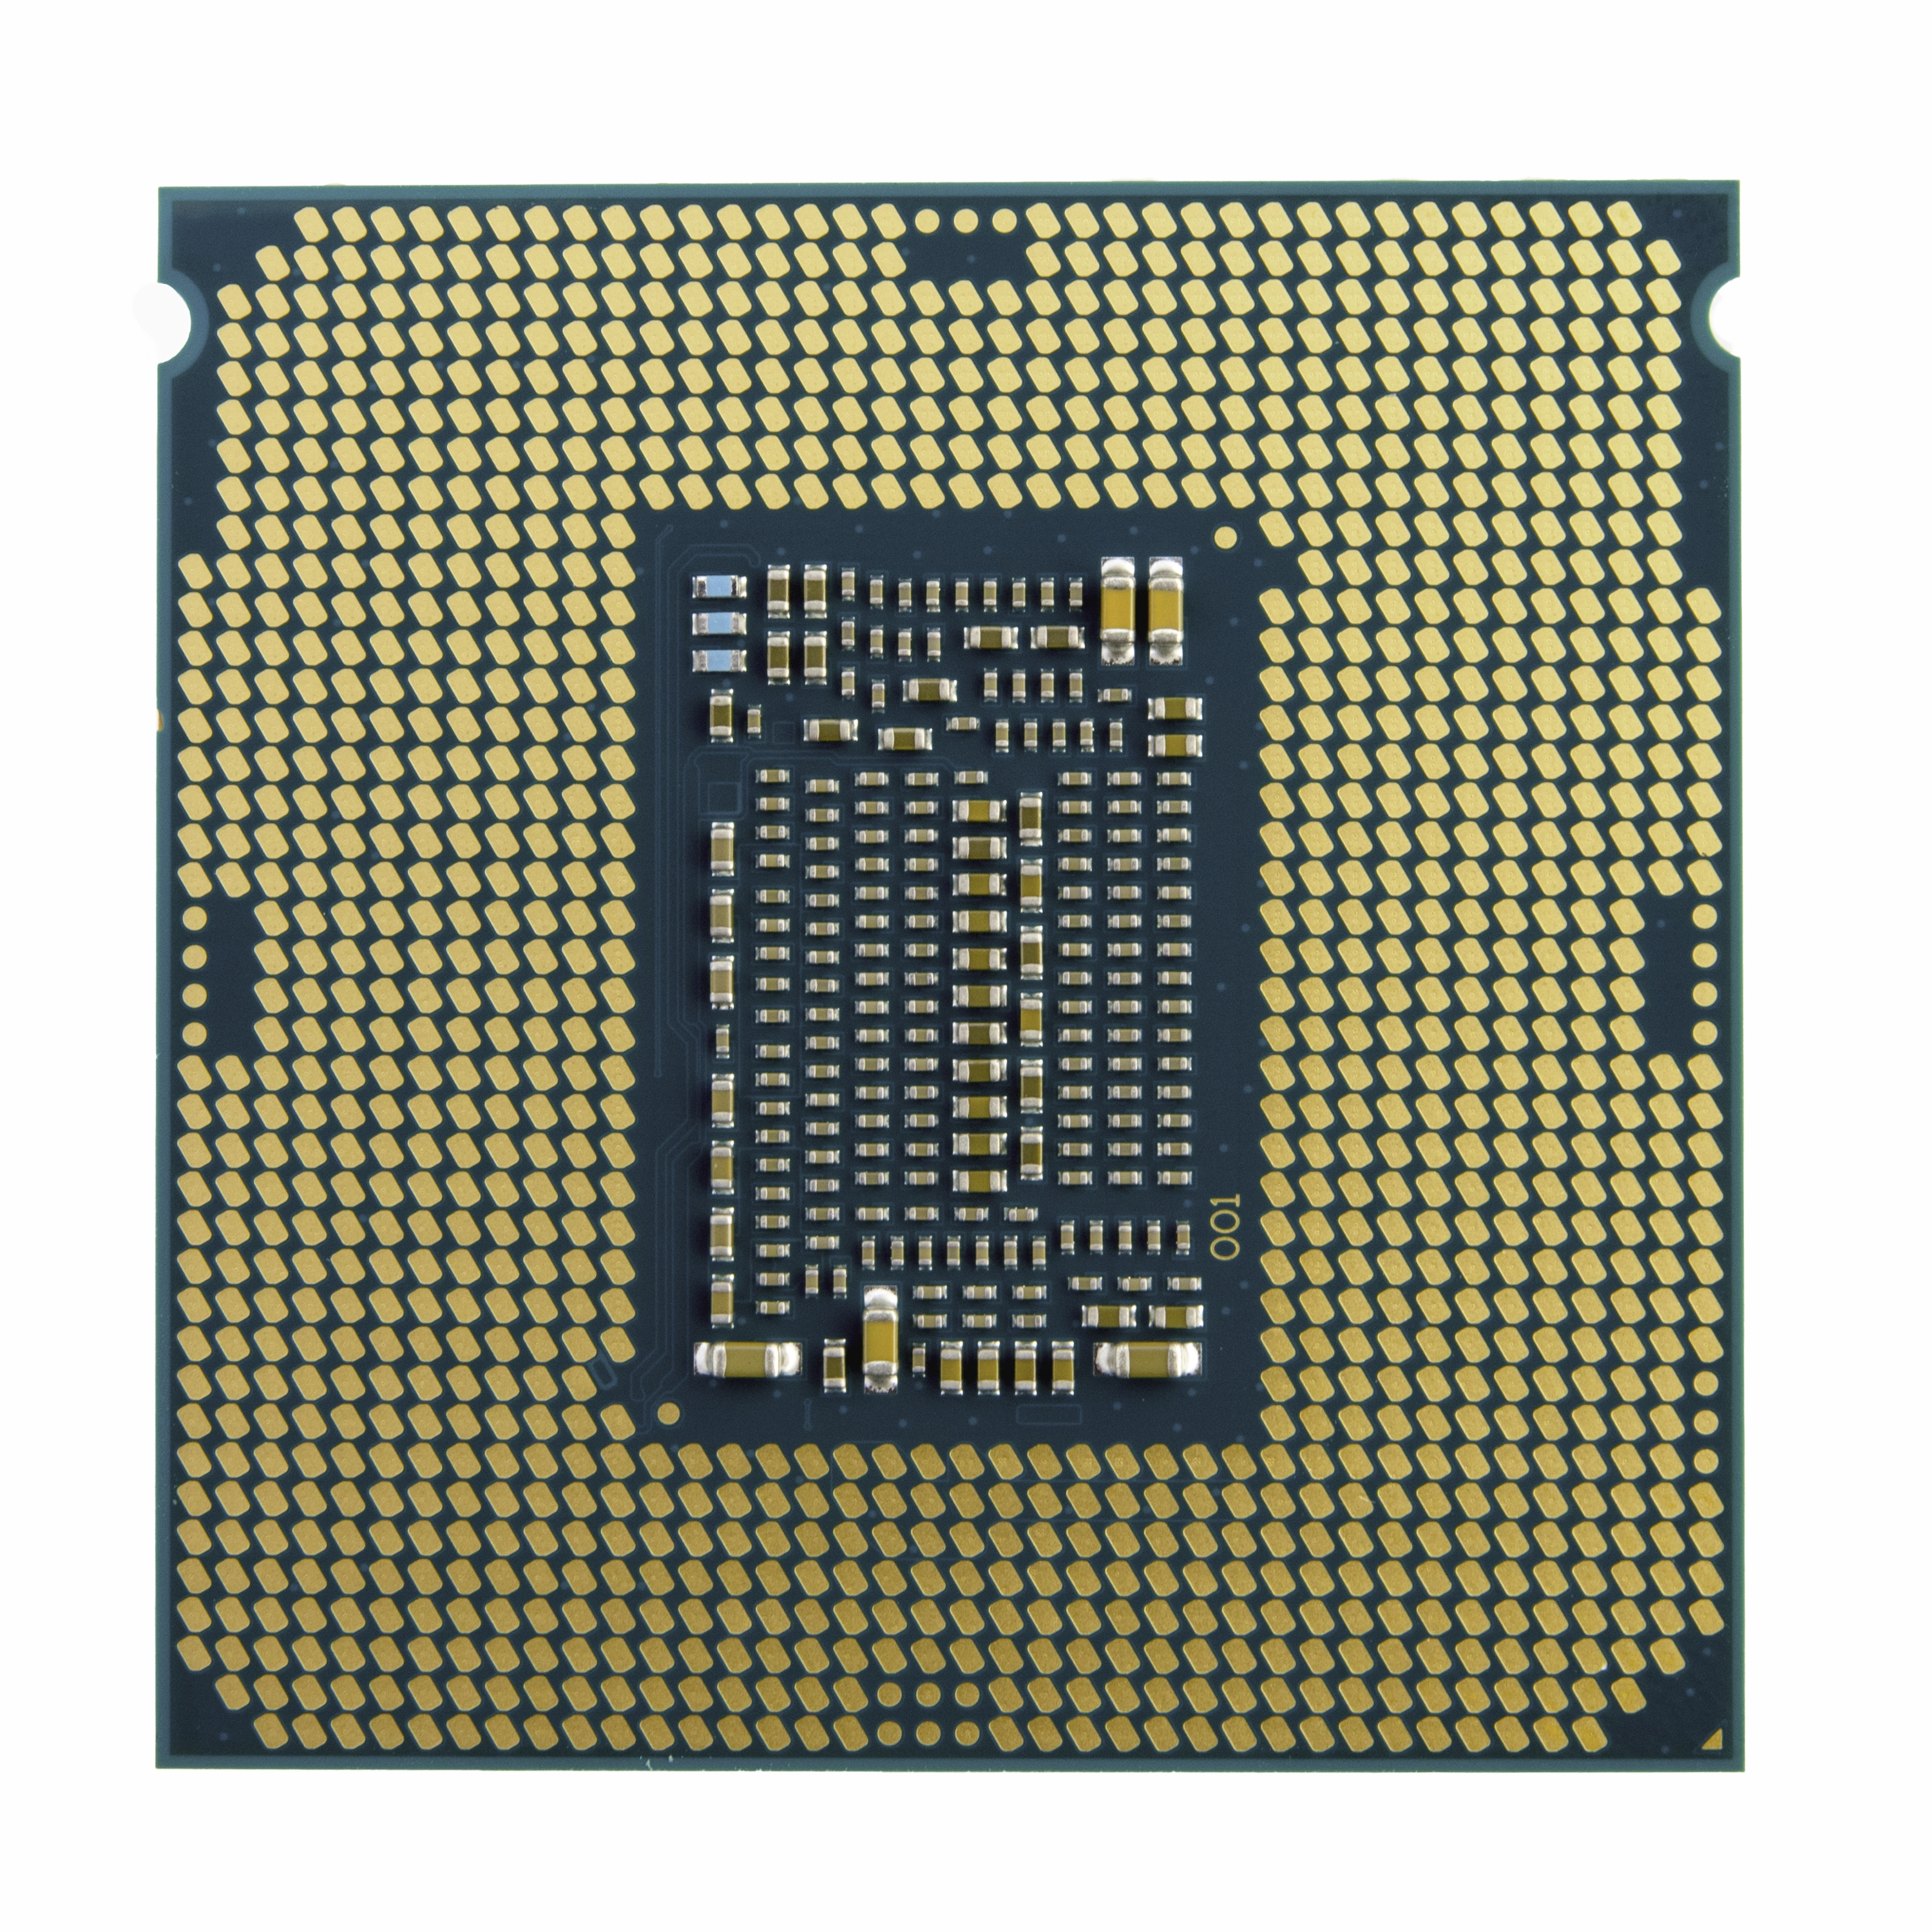 CPU INTEL CELERON G5905 3,5Ghz 4MB SK1200 BOX